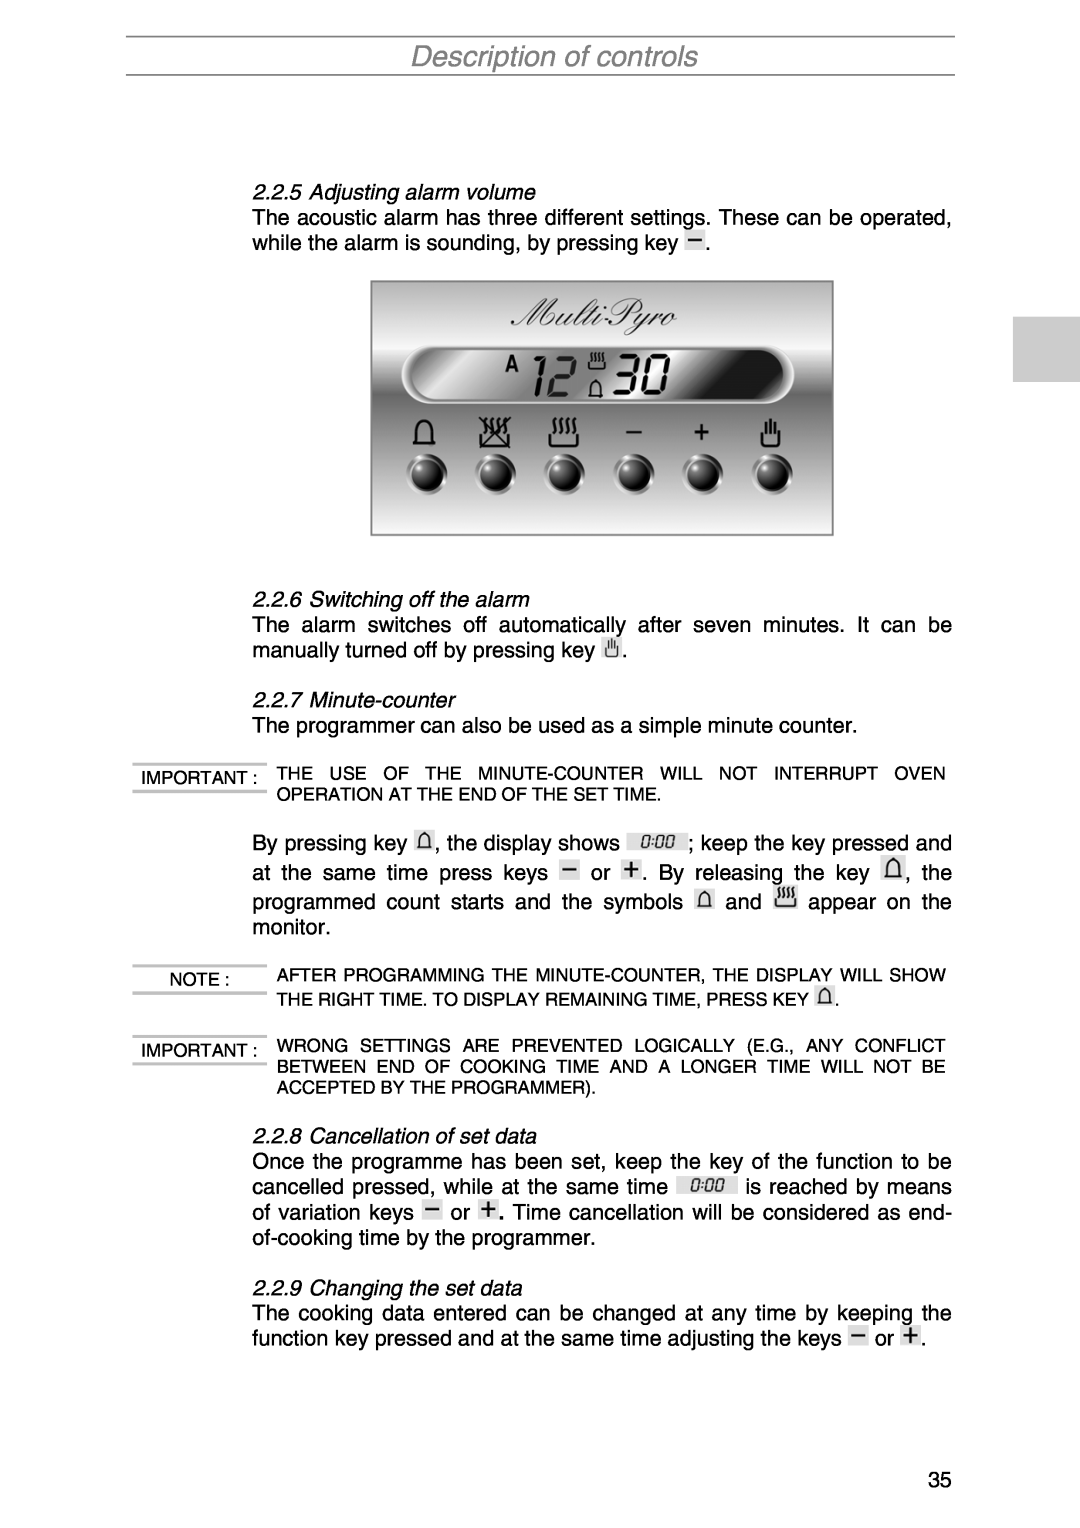 Smeg PIRO10NE manual Description of controls, Adjusting alarm volume, Switching off the alarm, Minute-counter 